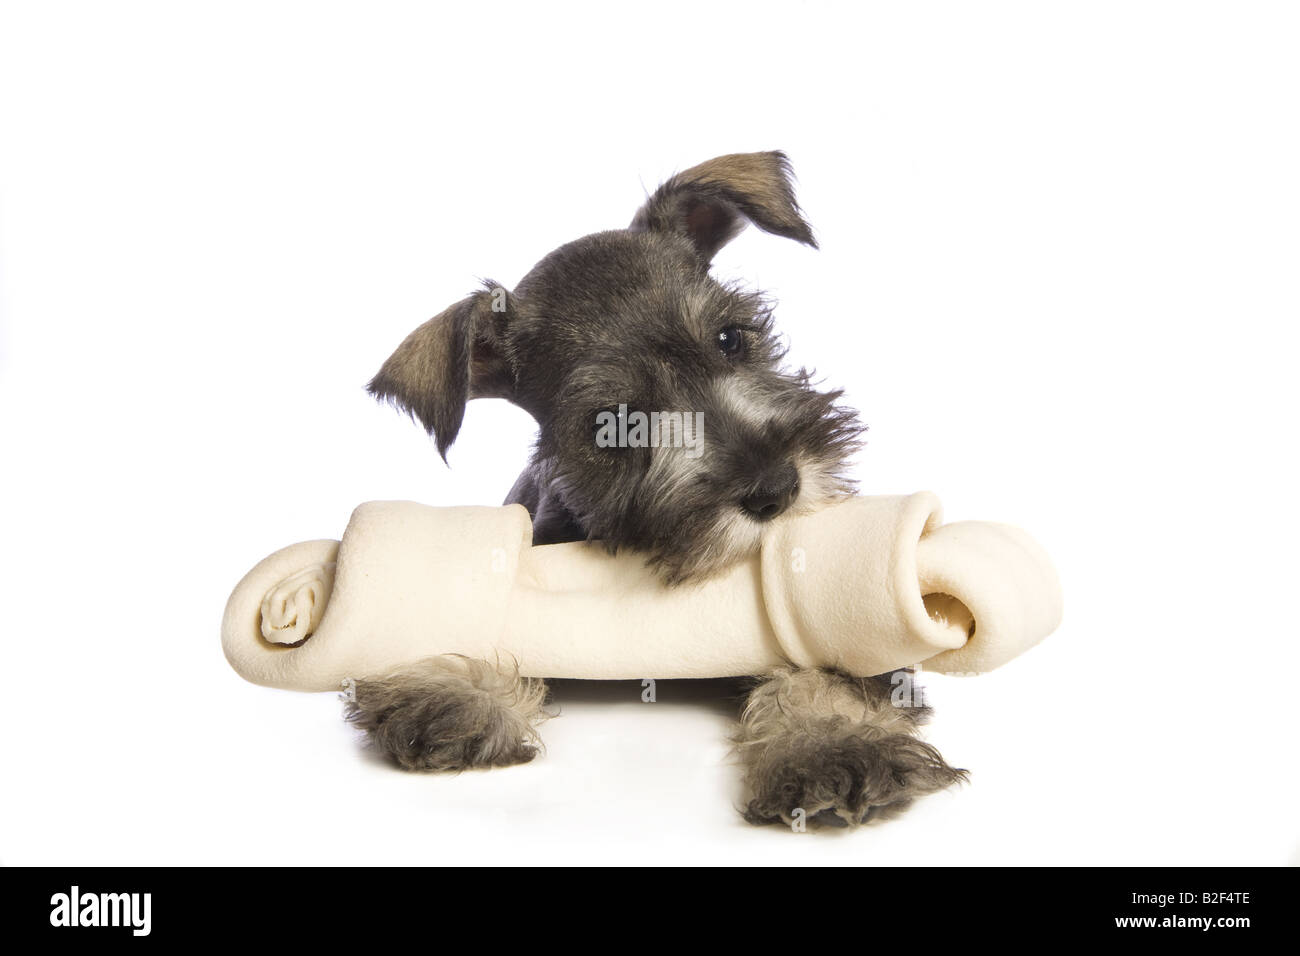 https://c8.alamy.com/comp/B2F4TE/adorable-miniature-schnauzer-puppy-with-big-rawhide-bone-isolated-B2F4TE.jpg